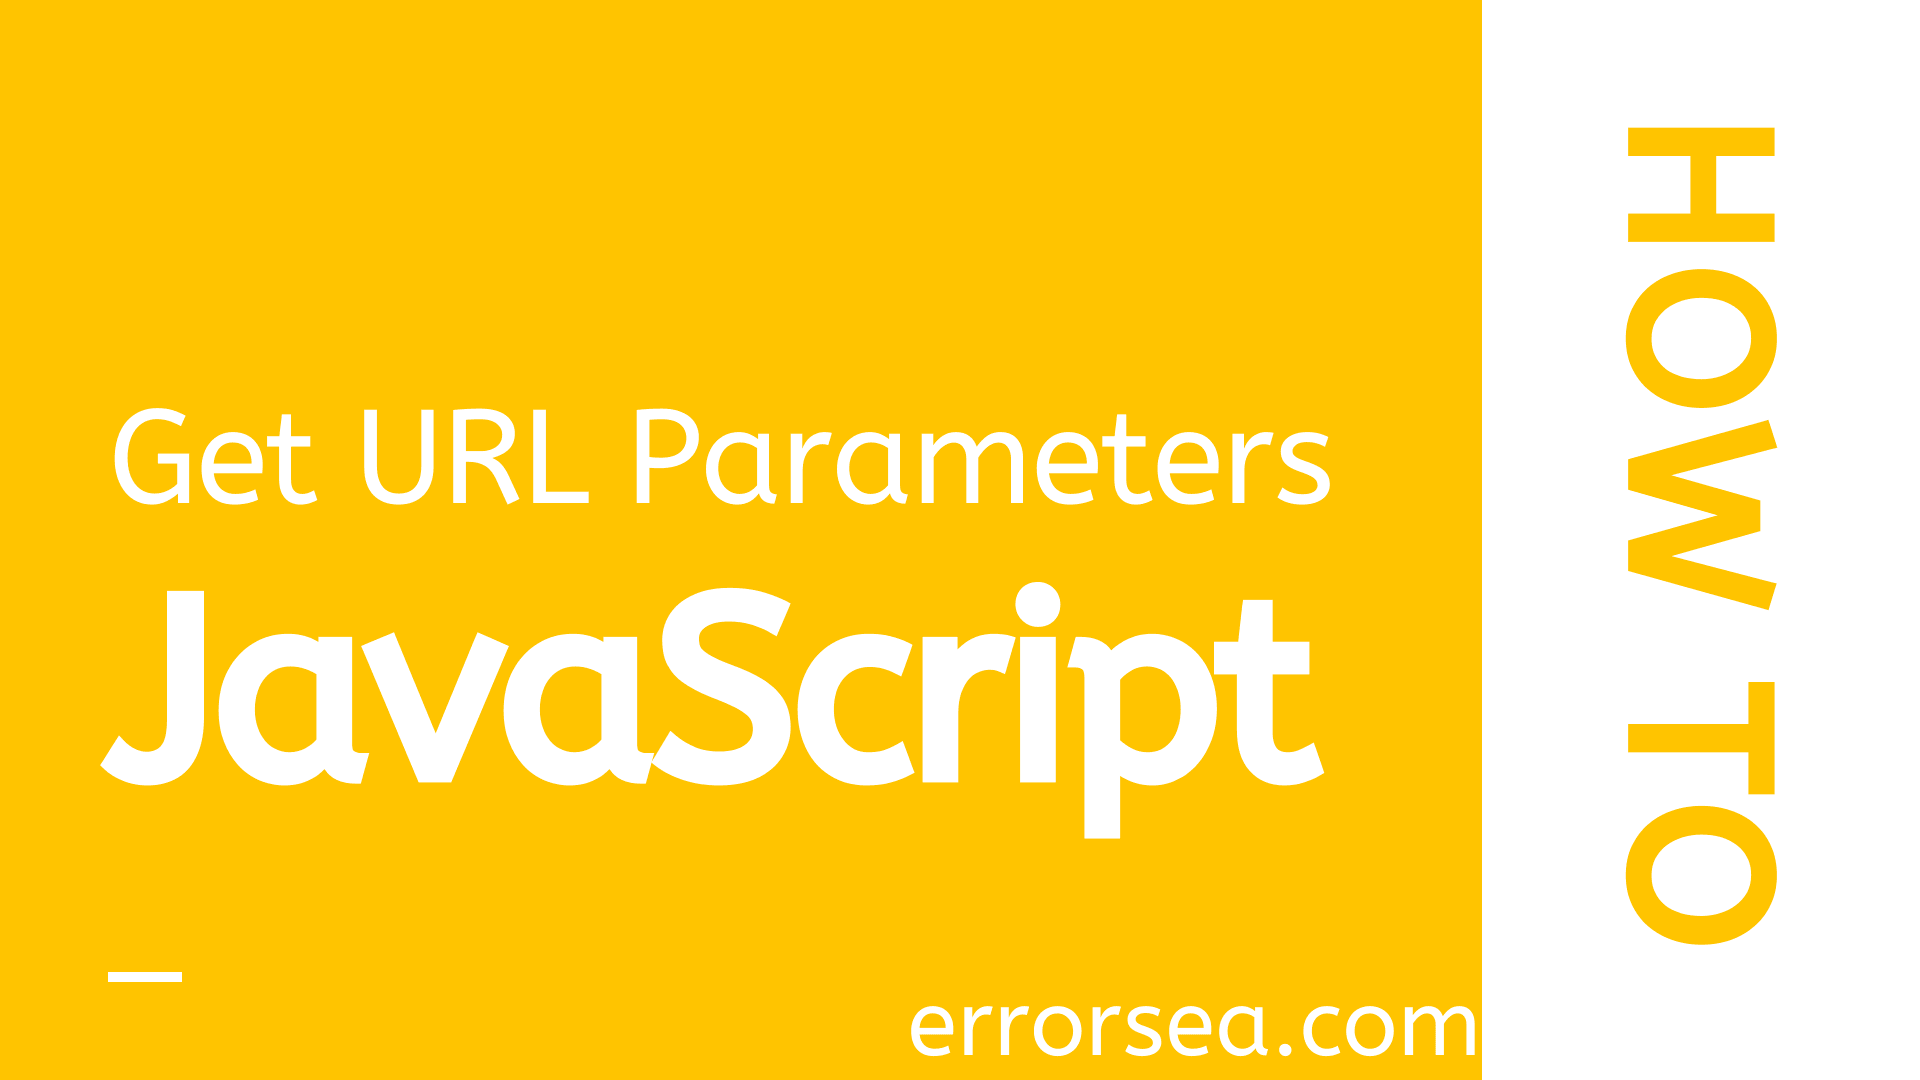 How to Get URL Parameters Using JavaScript